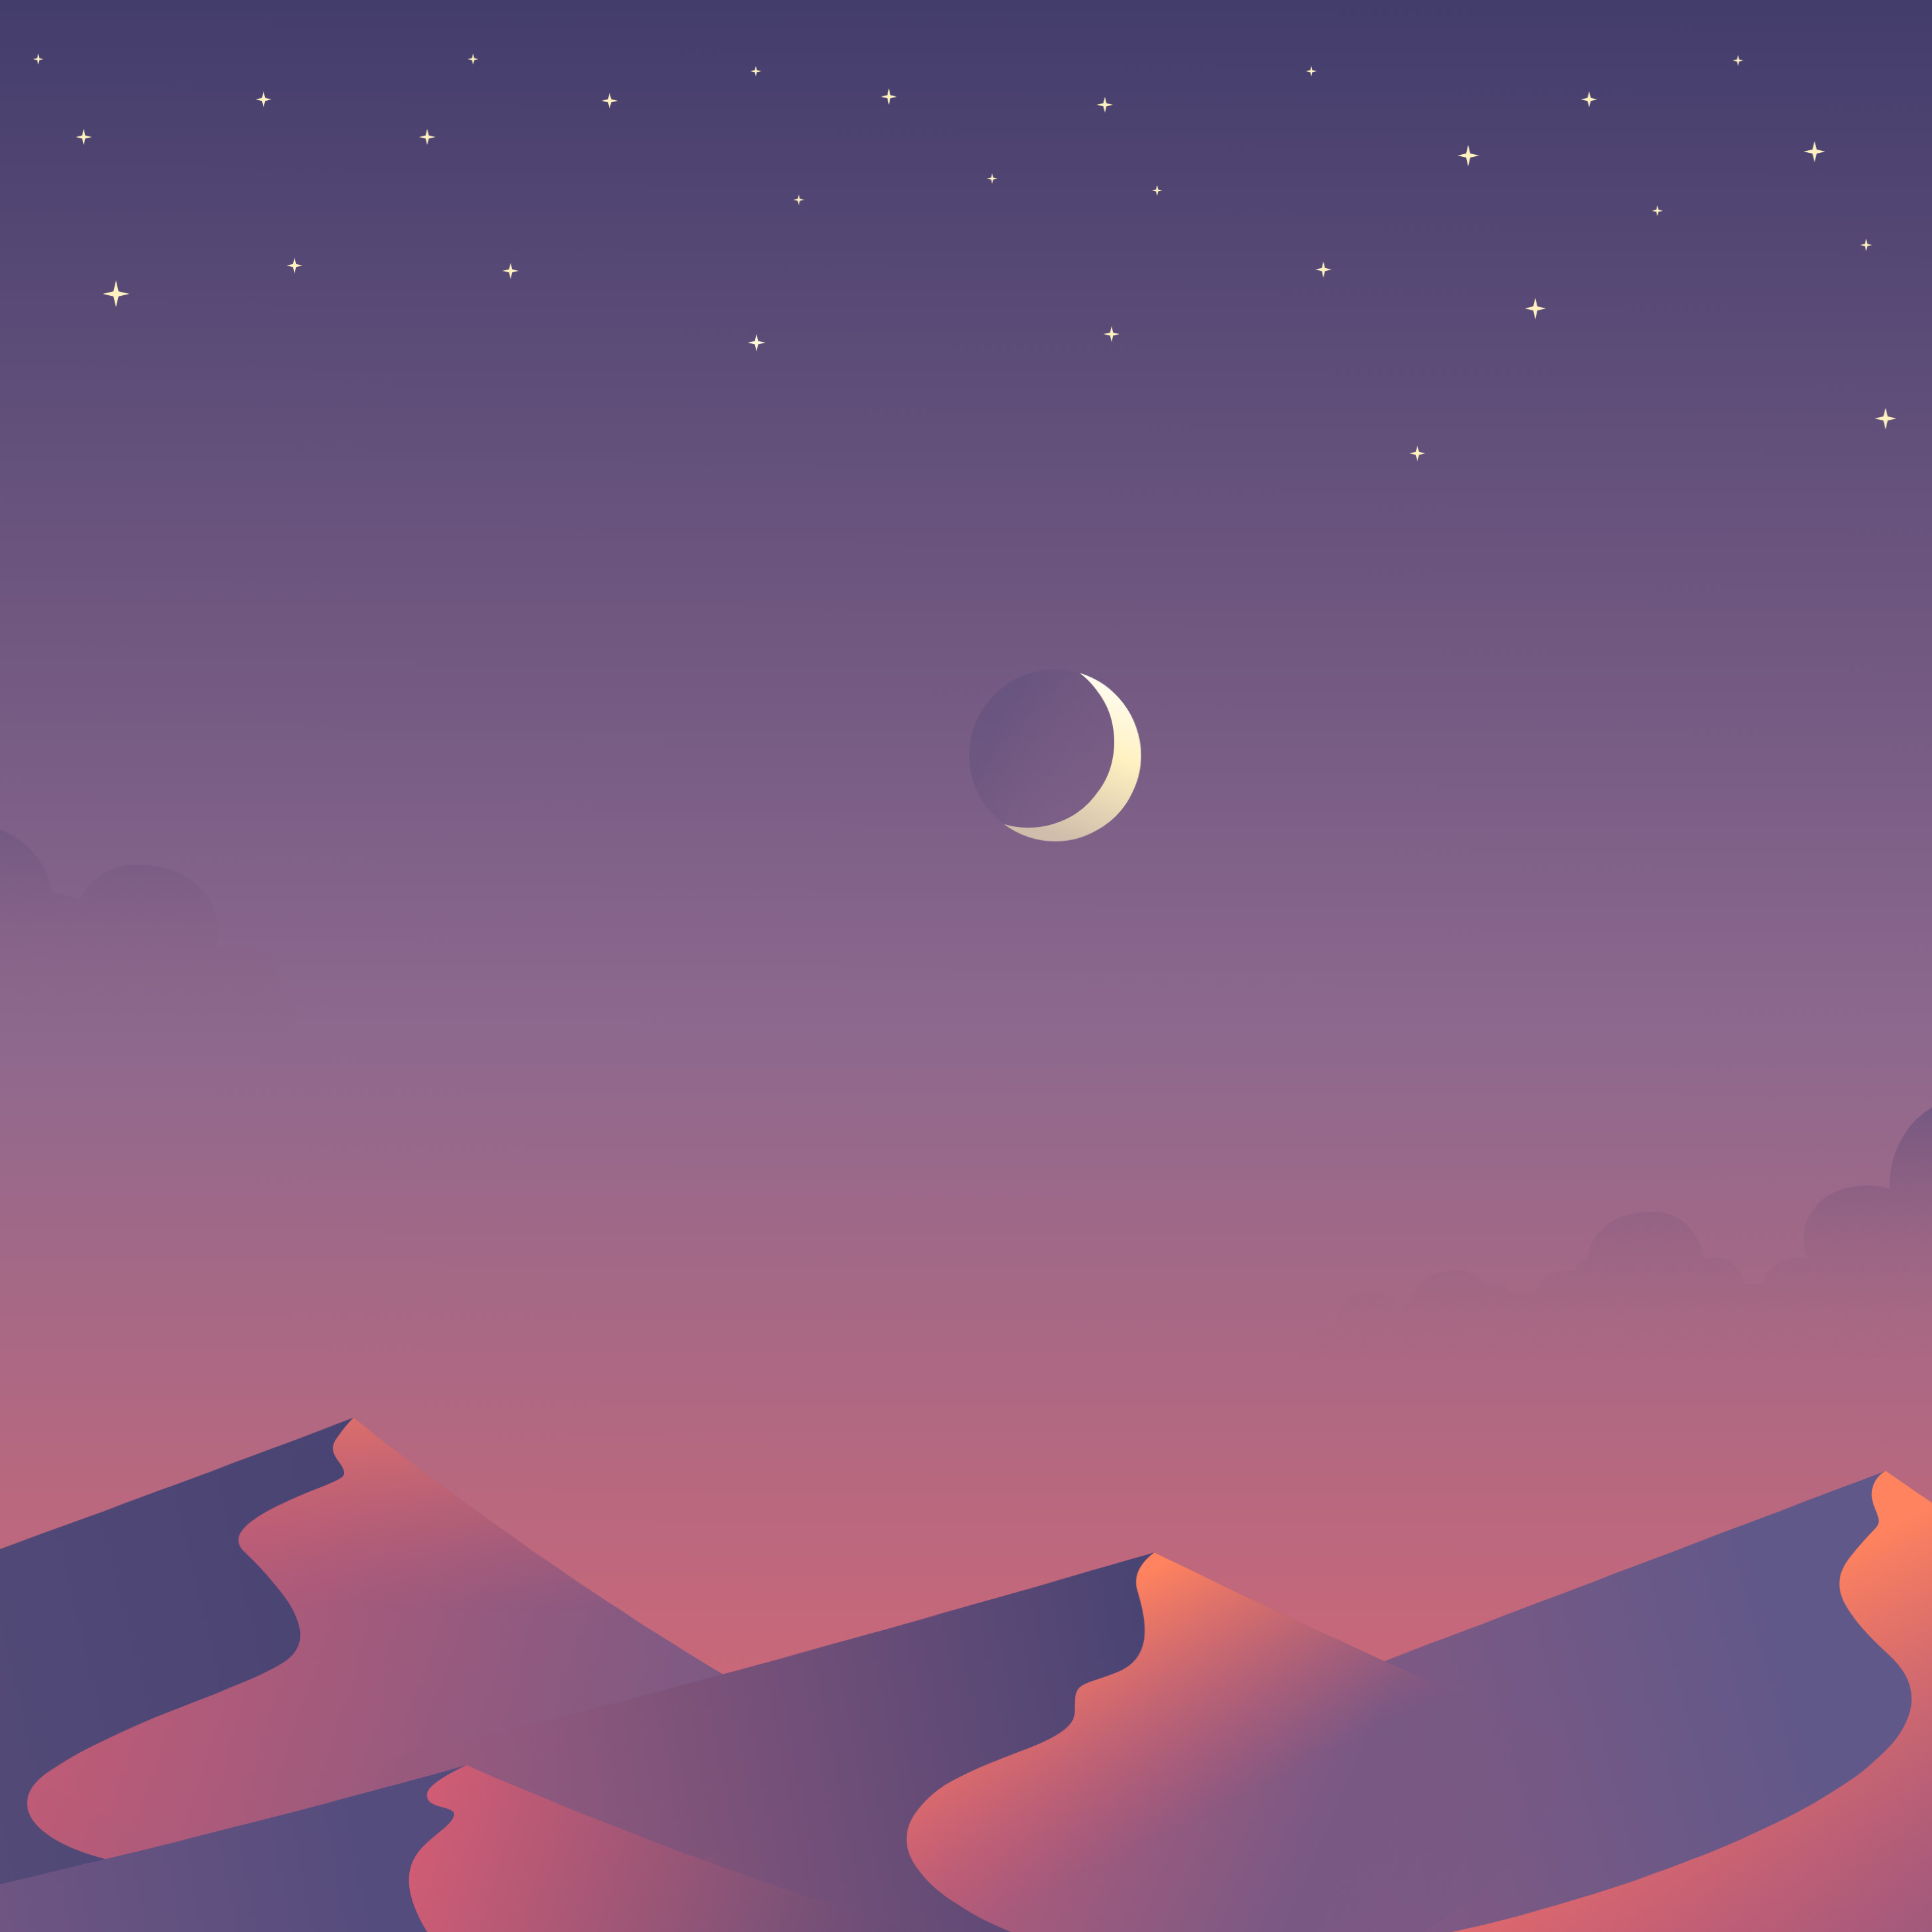 Desert Nights Moon 5k Minimalism iPad Pro Retina Display